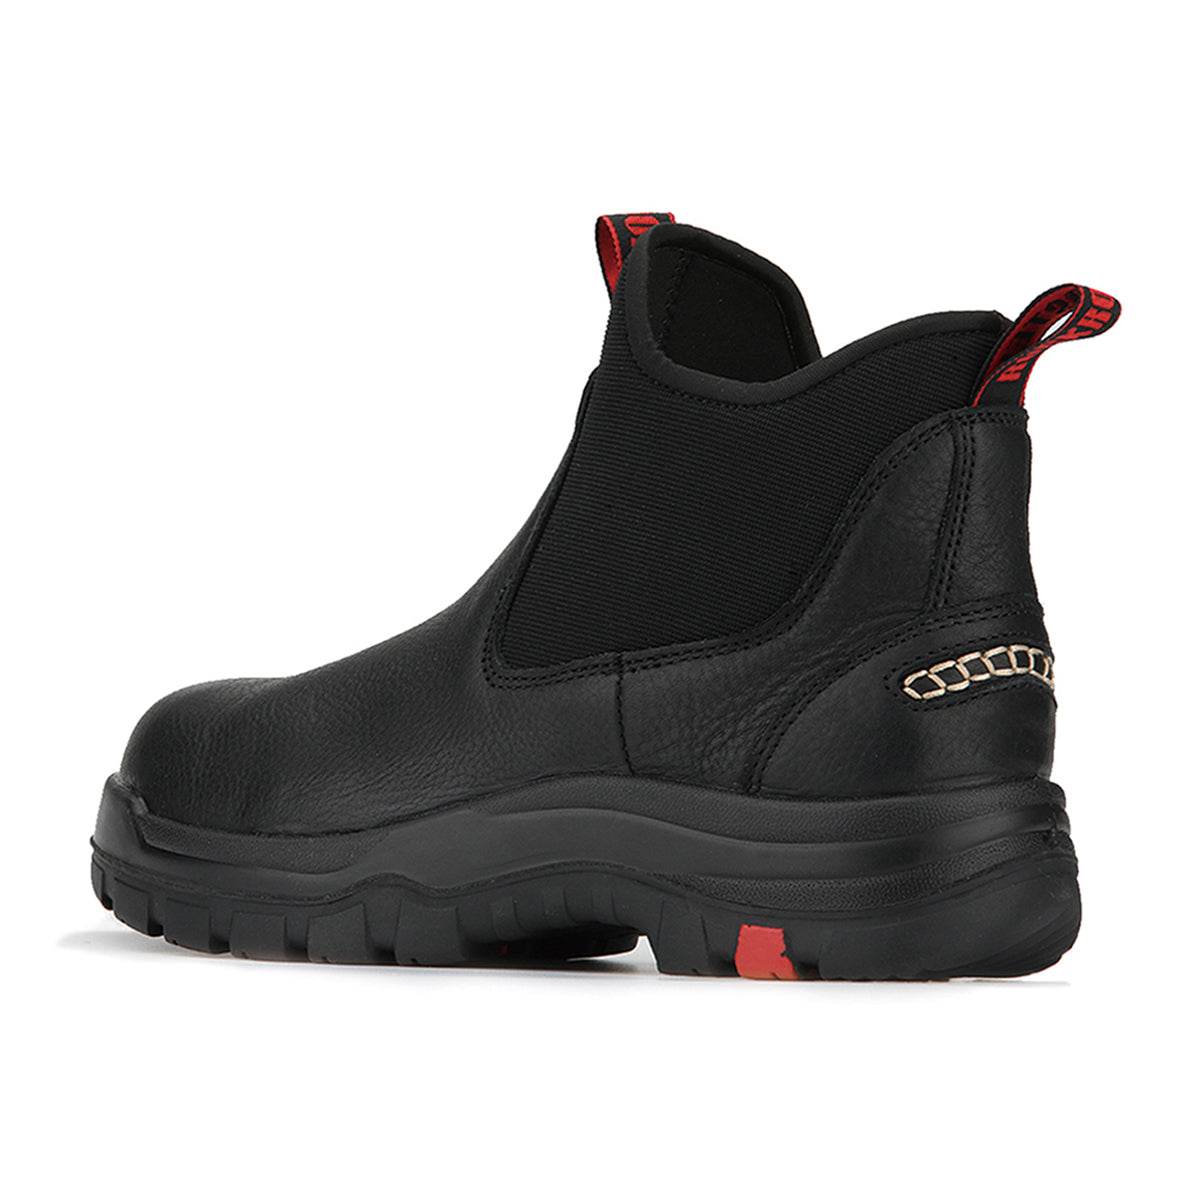 ROCKROOSTER Bakken 6 inch Soft Toe Black Leather Waterproof Work Boots - Mercantile Mountain